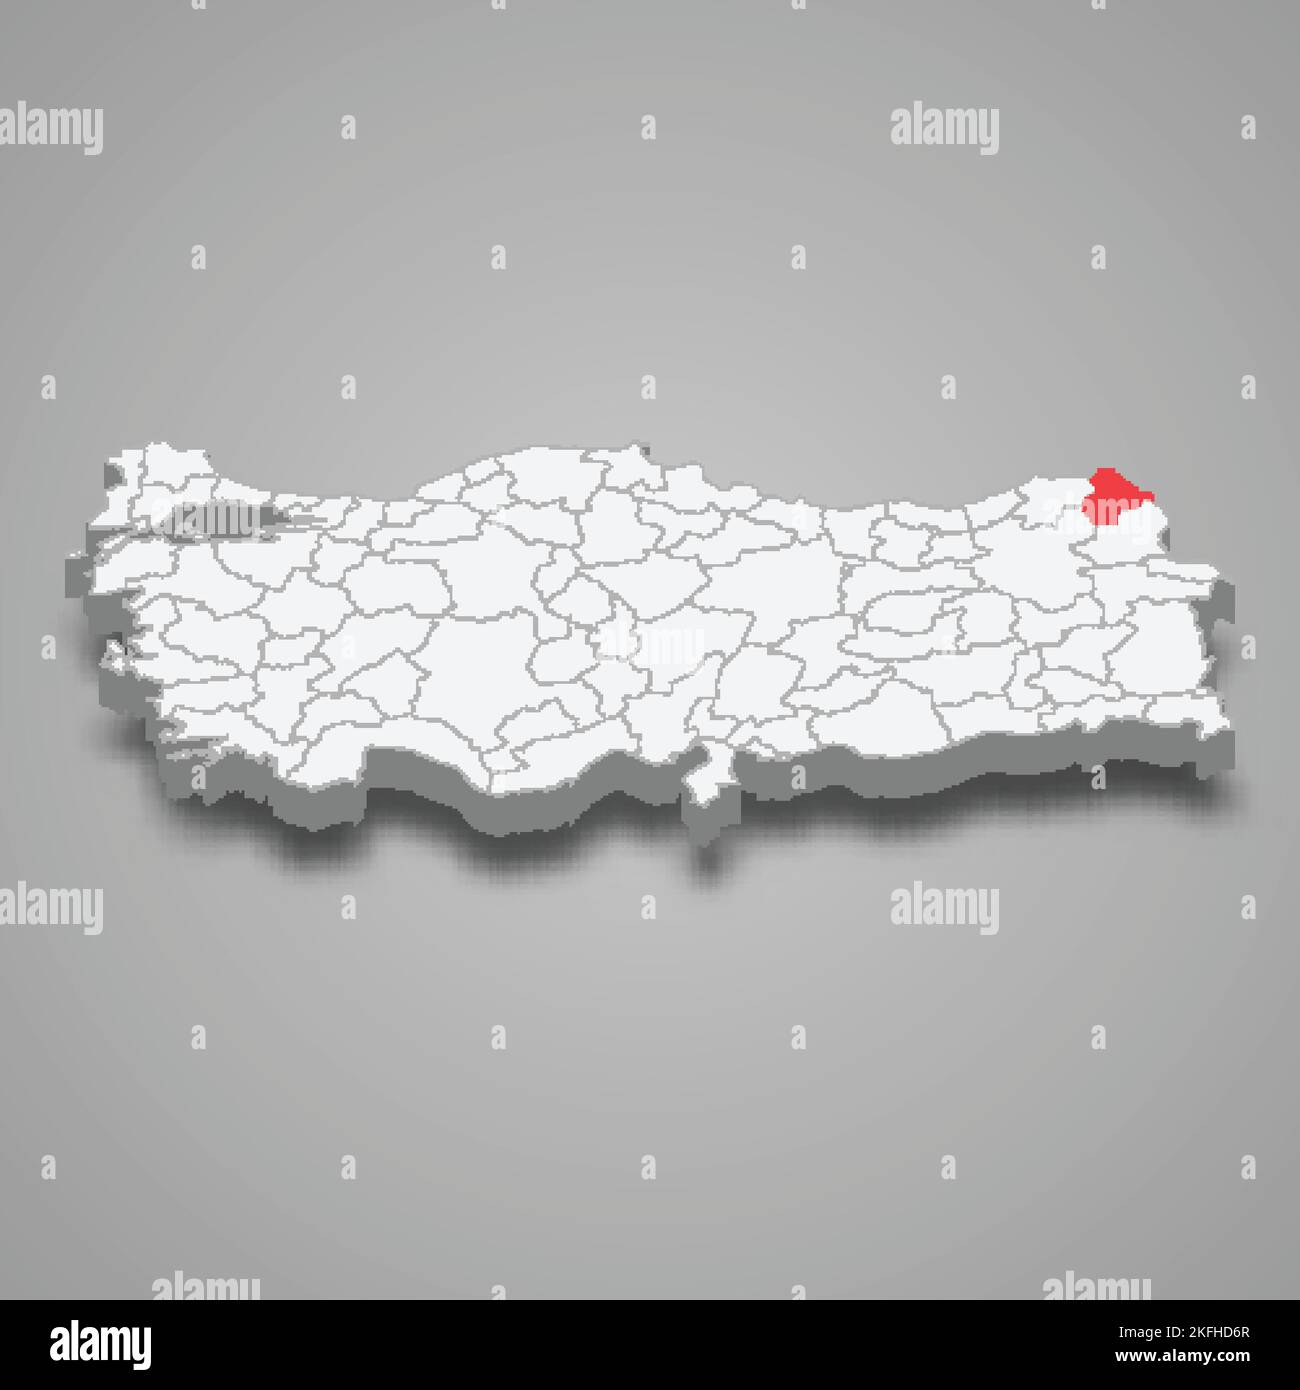 Ardahan region location within Turkey 3d isometric map Stock Vector